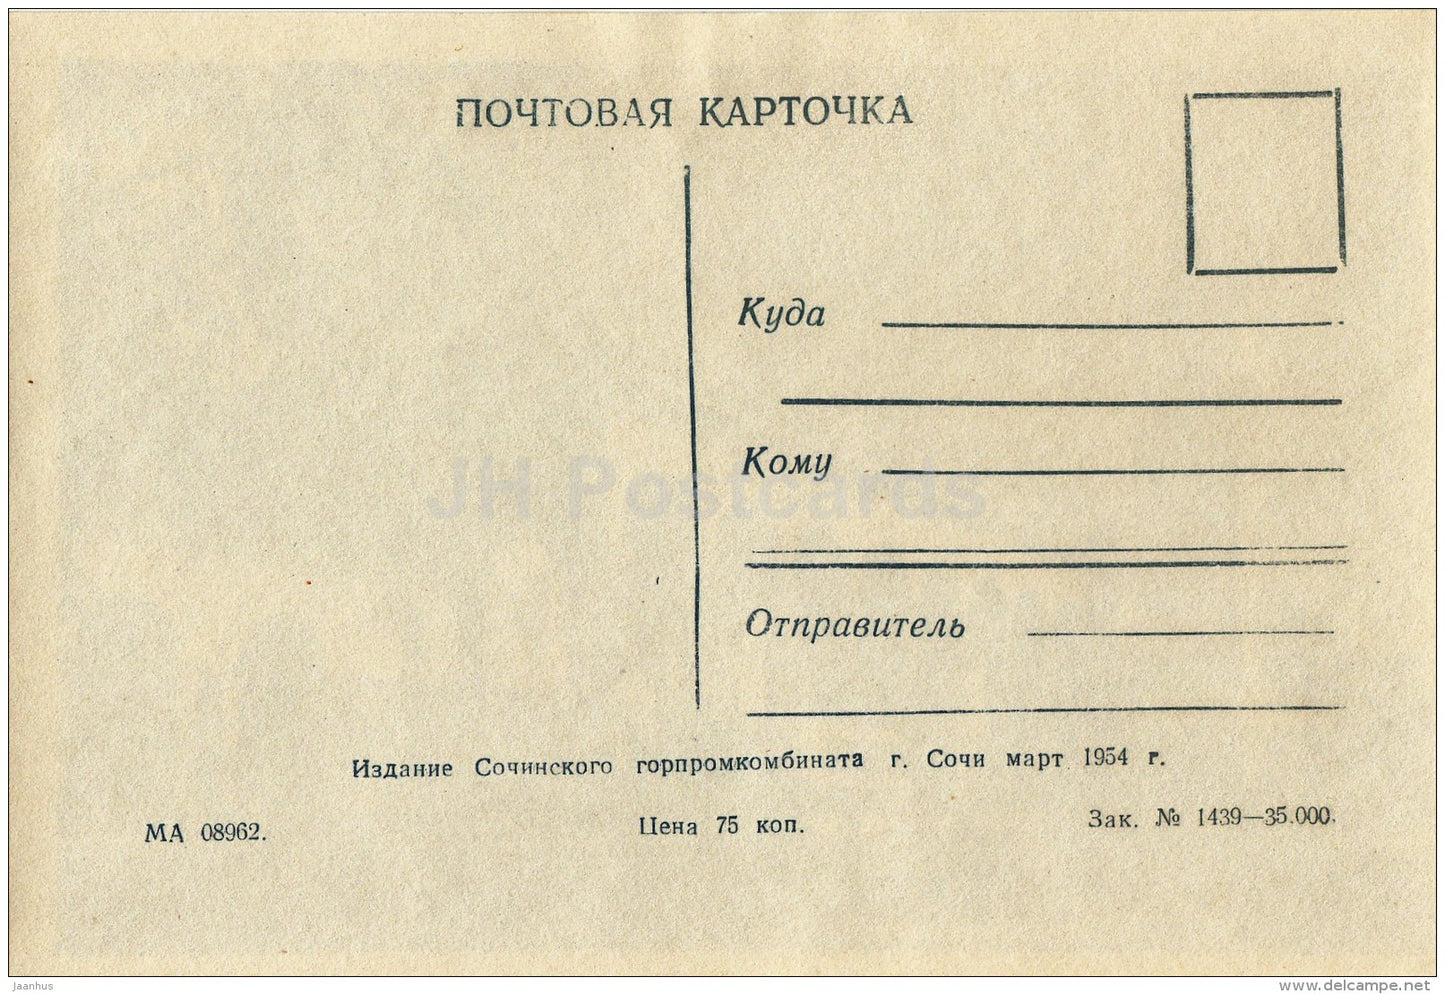 railway station - bus - Sochi - photo card - 1954 - Russia USSR - unused - JH Postcards